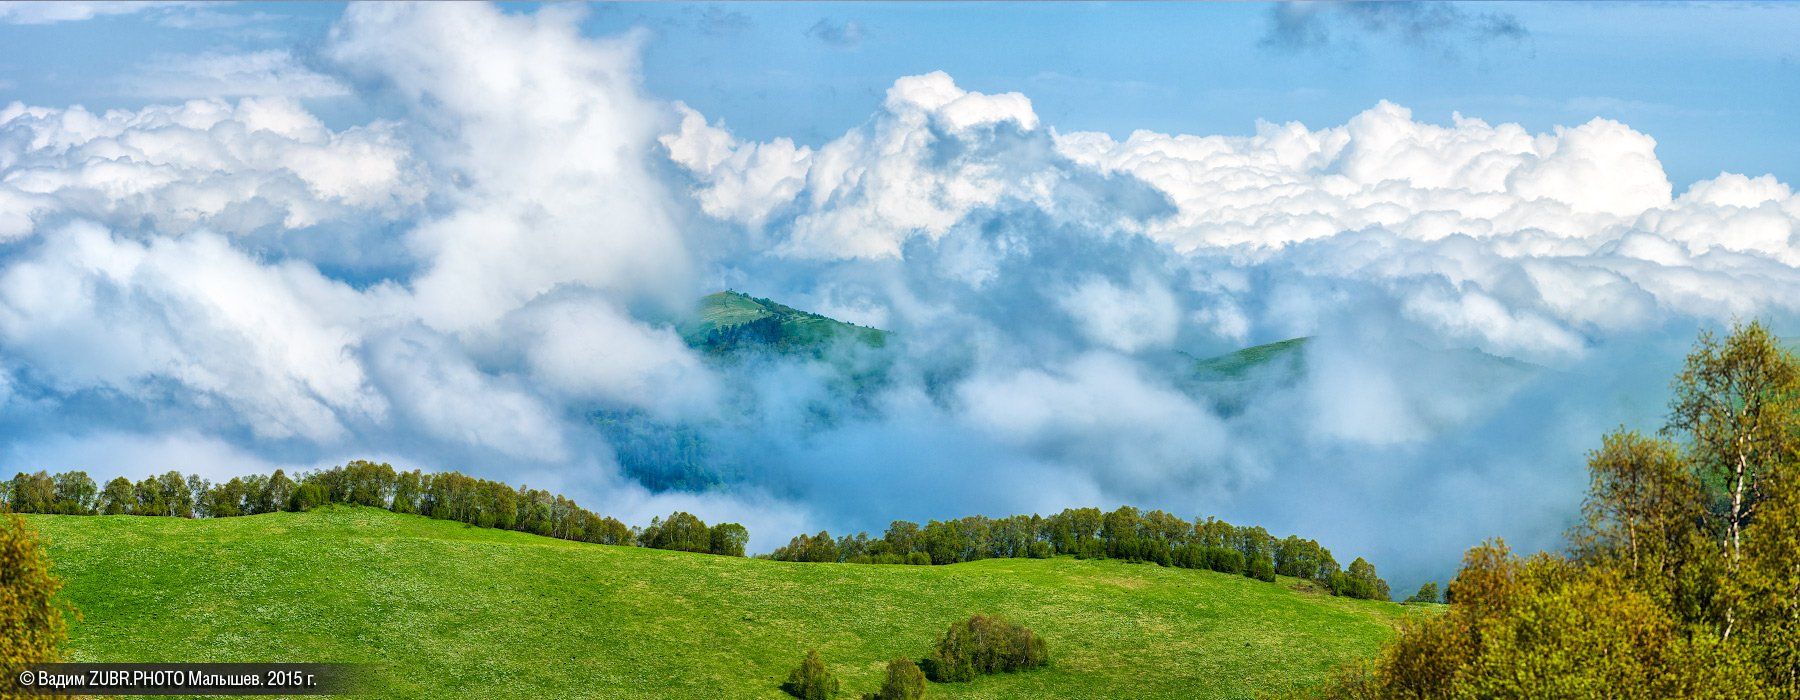 панорама, пейзаж, горы, заповедник, лето, облака, zubrphoto, Вадим ZUBR Малышев